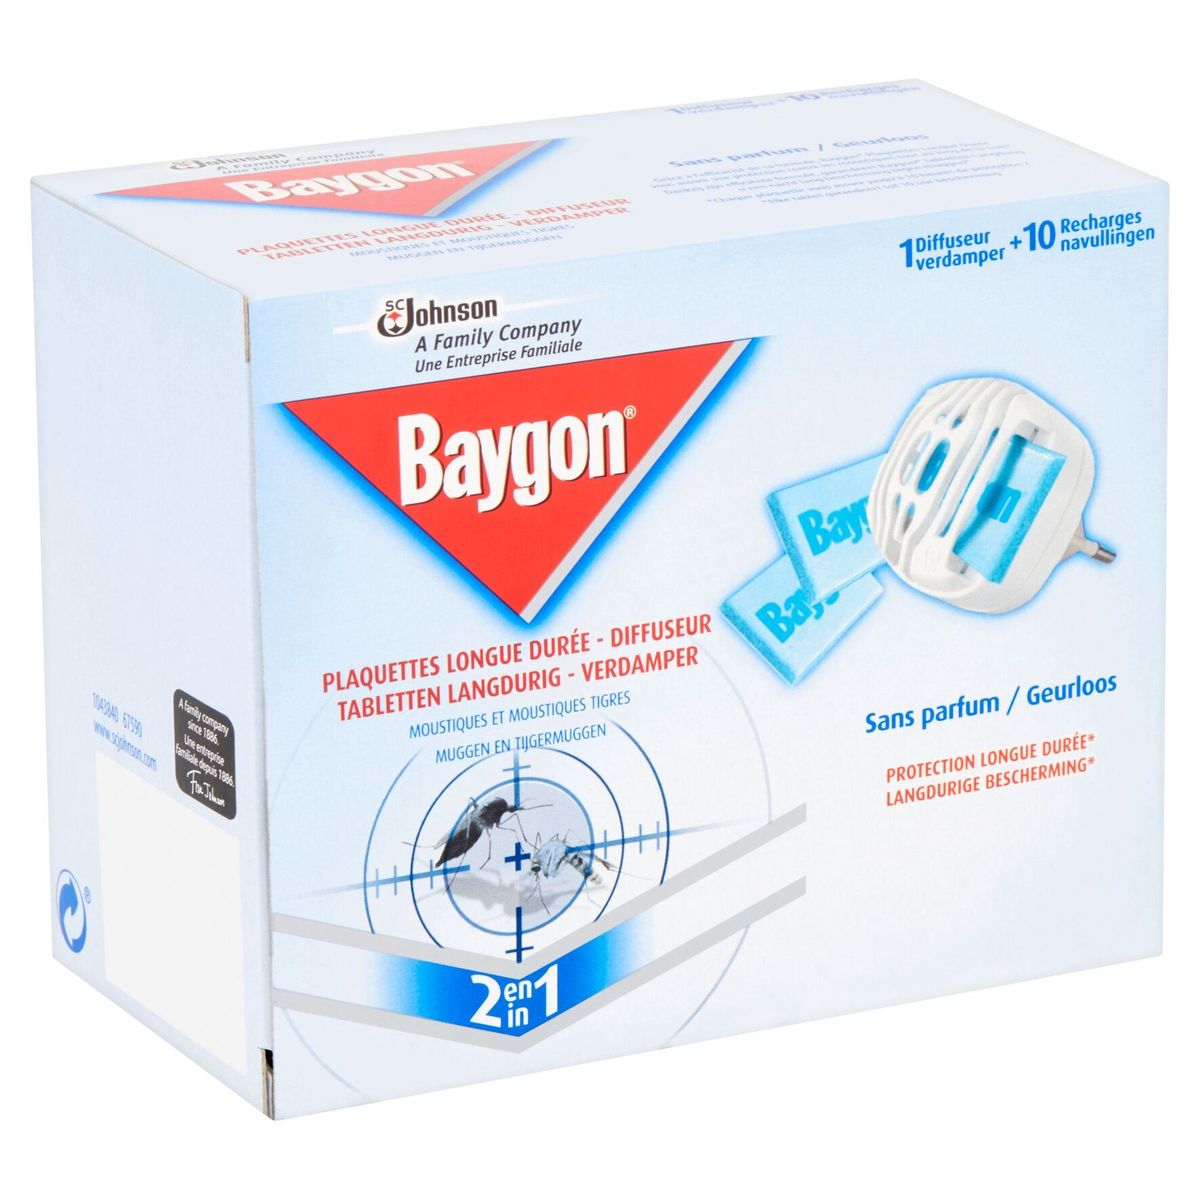 Baygon Tabletten Langdurig - Verdamper 2 in 1 10 x 0.635 g